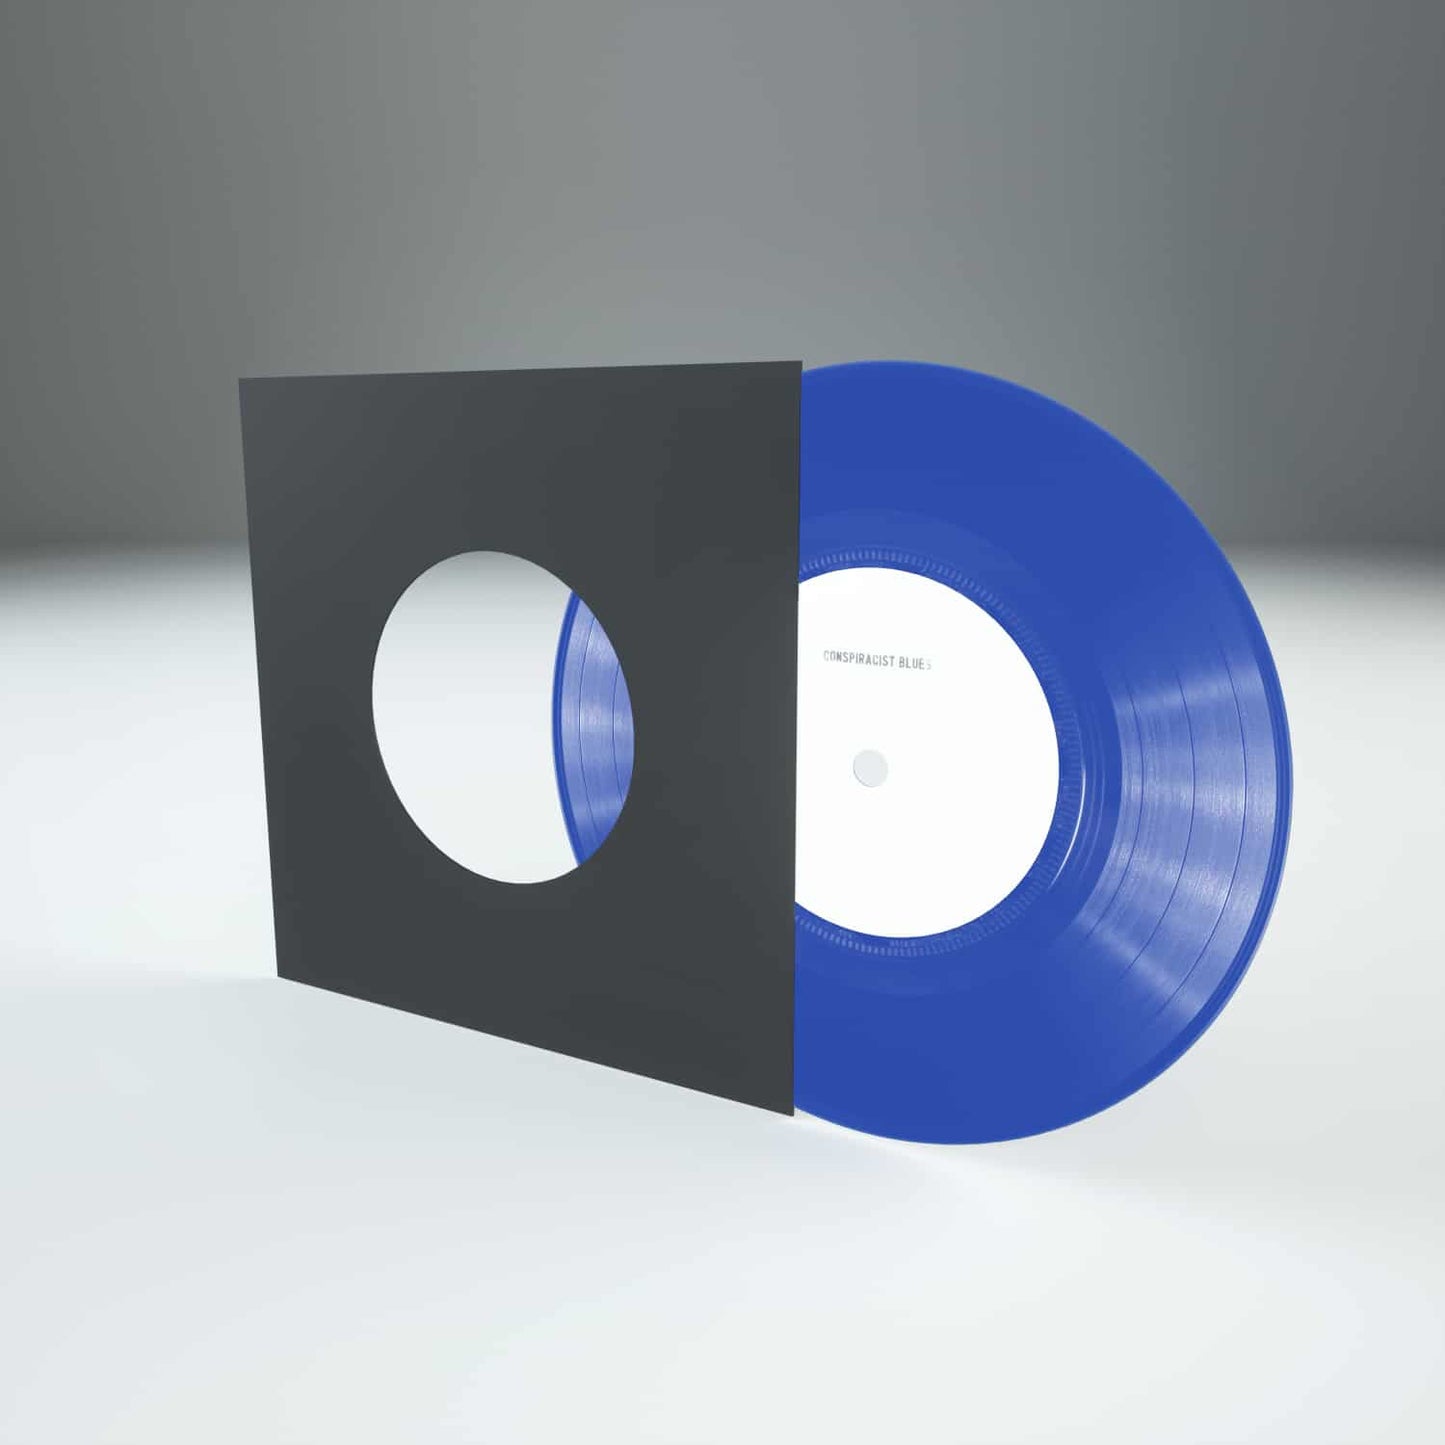 Julian Cope / Autogeddon vinyl box set